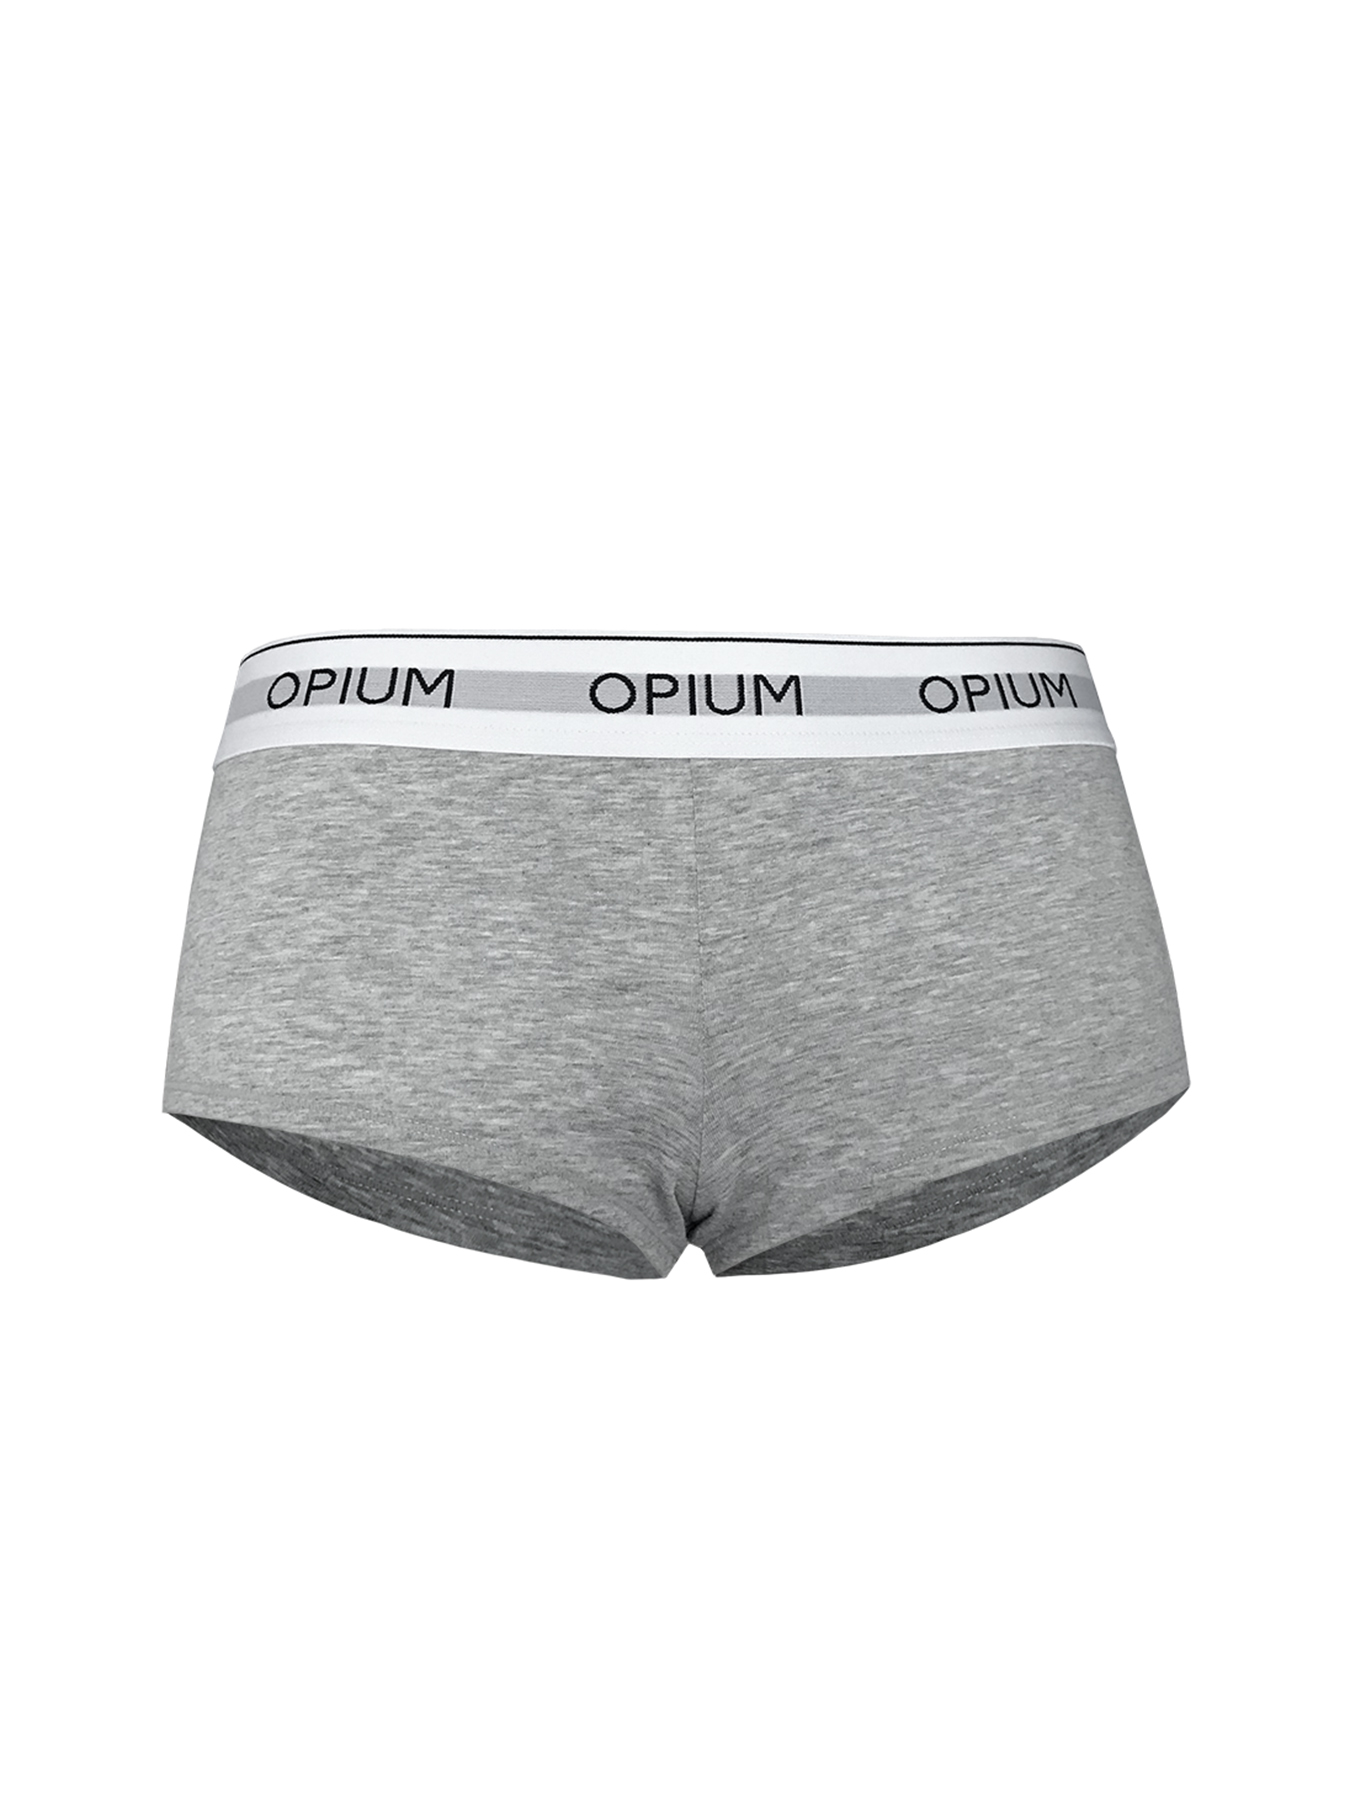 Opium трусики t-96, серые*